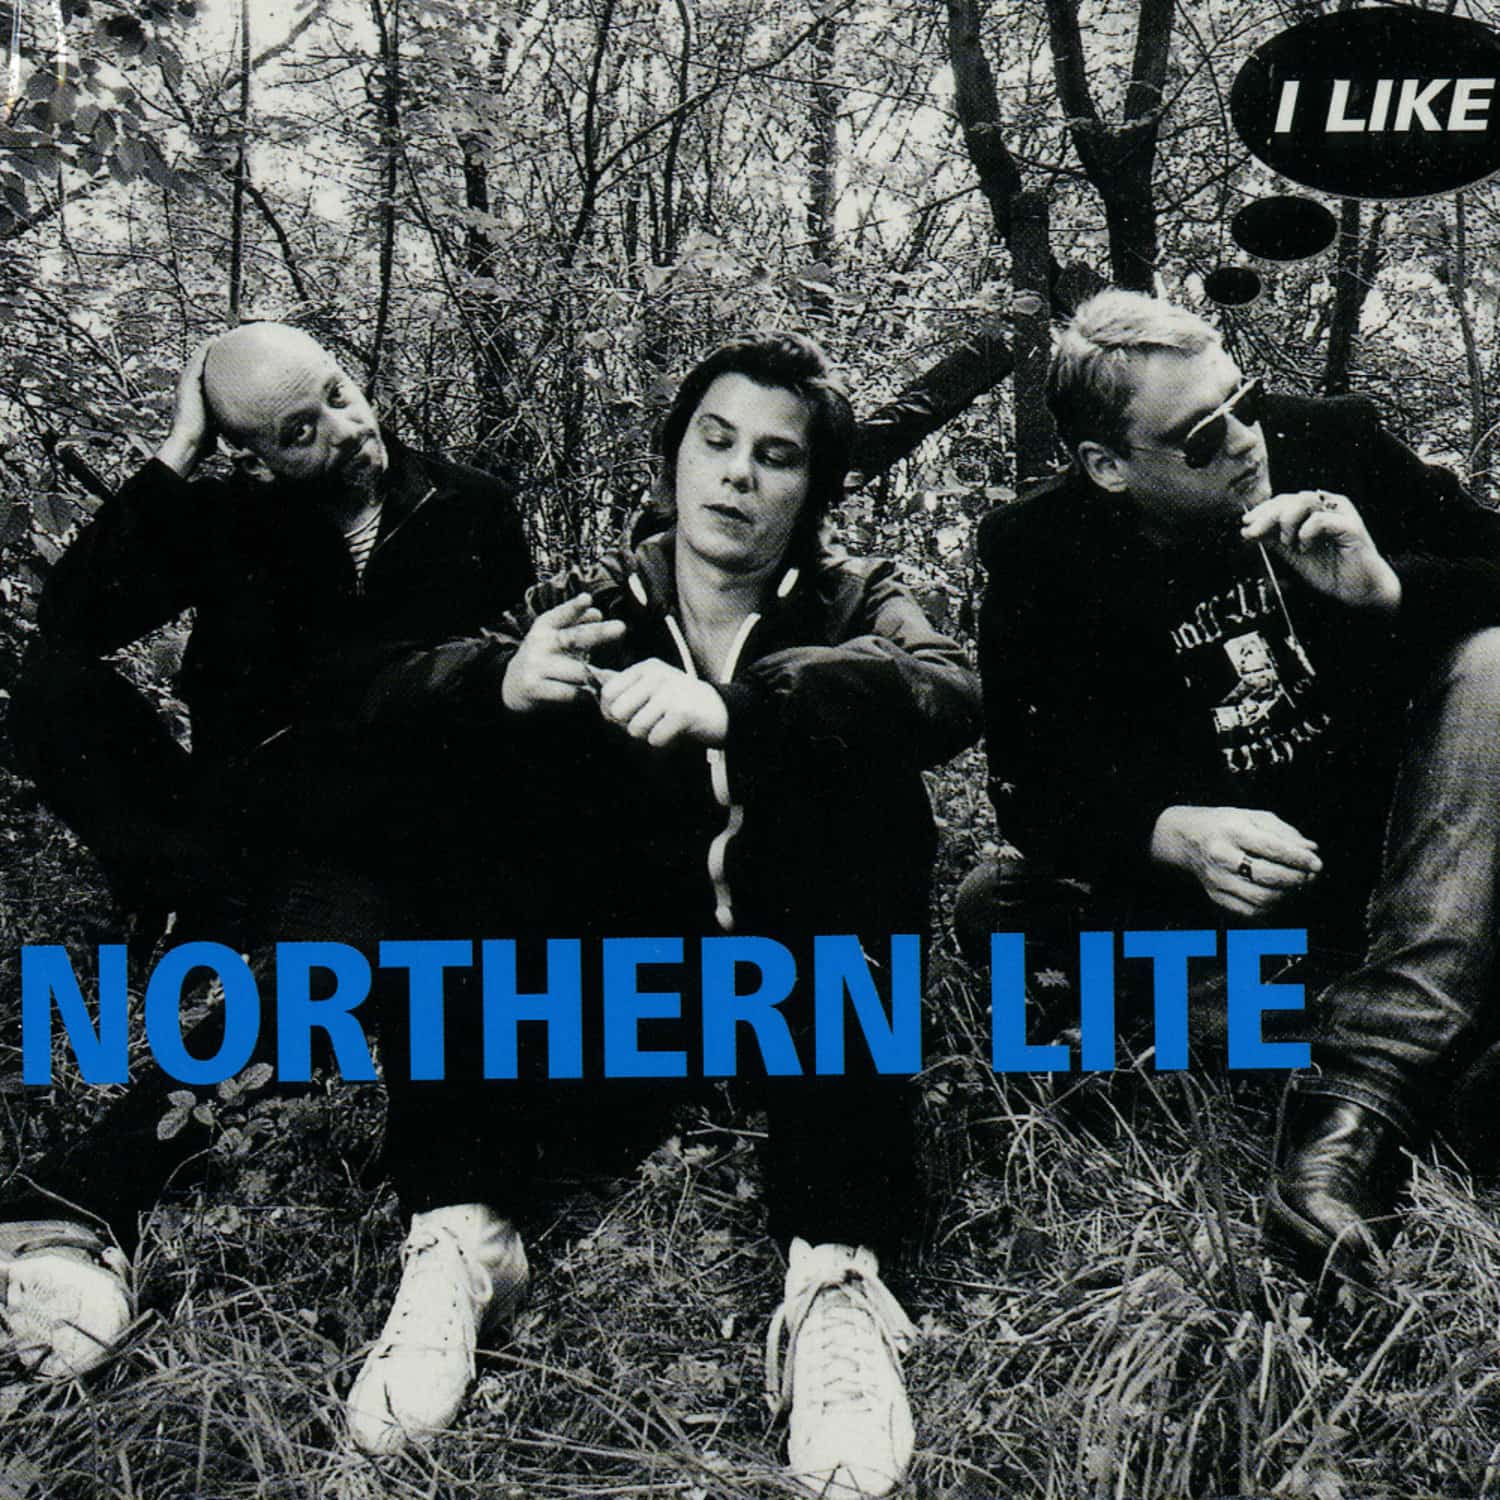 Northern Lite - I LIKE 